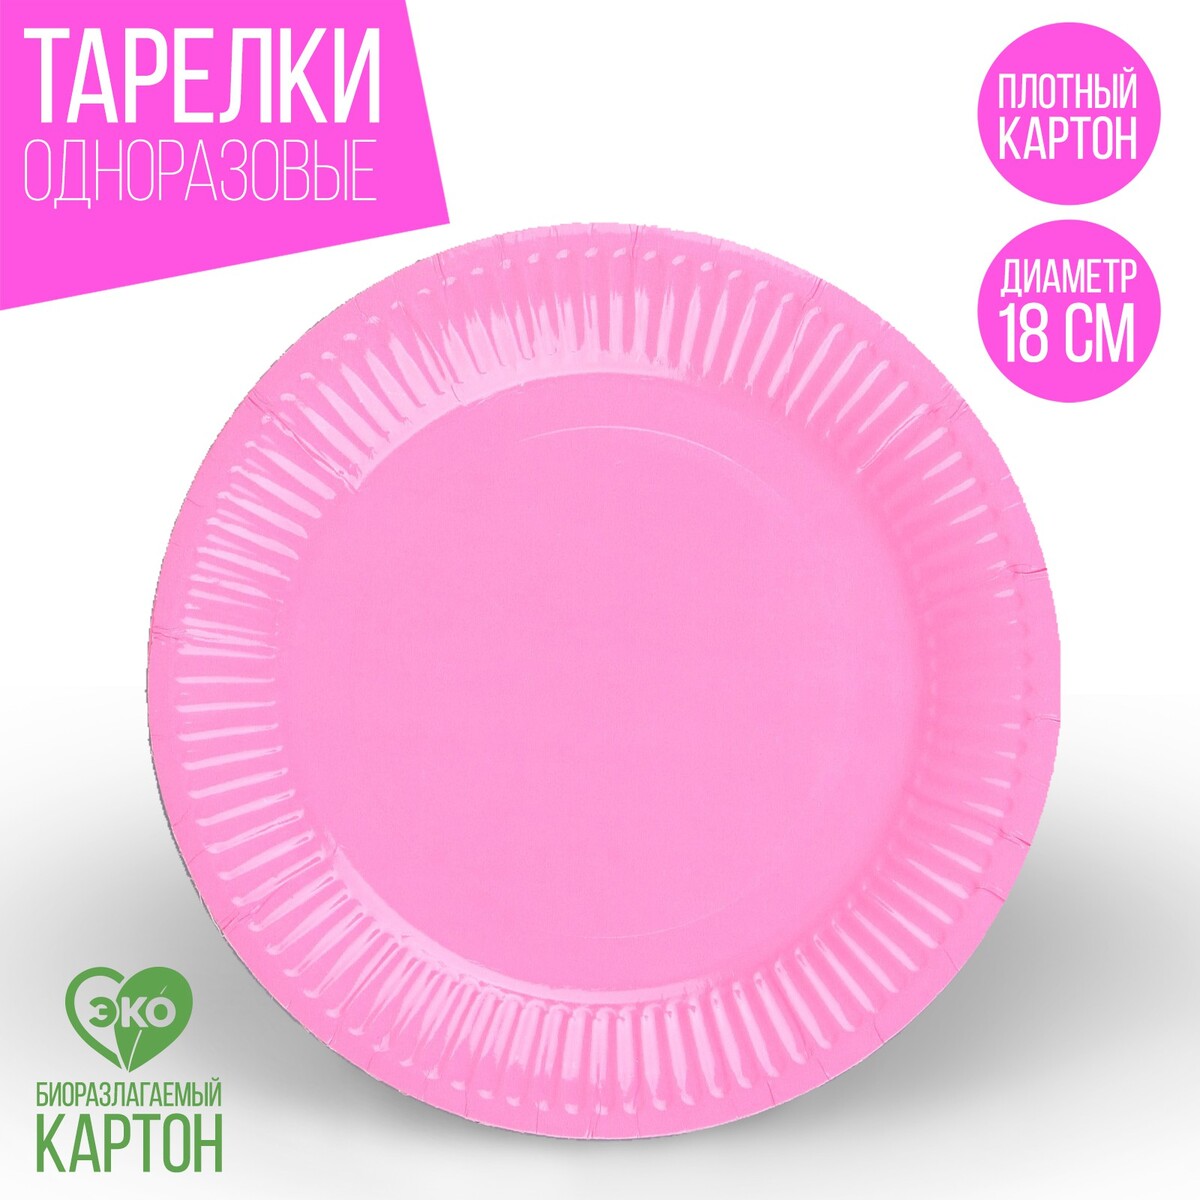 Тарелка одноразовая бумажная однотонная, цвет розовый 18 см, набор 10 штук тарелка бумажная однотонная 18 см в наборе 10 шт розовый